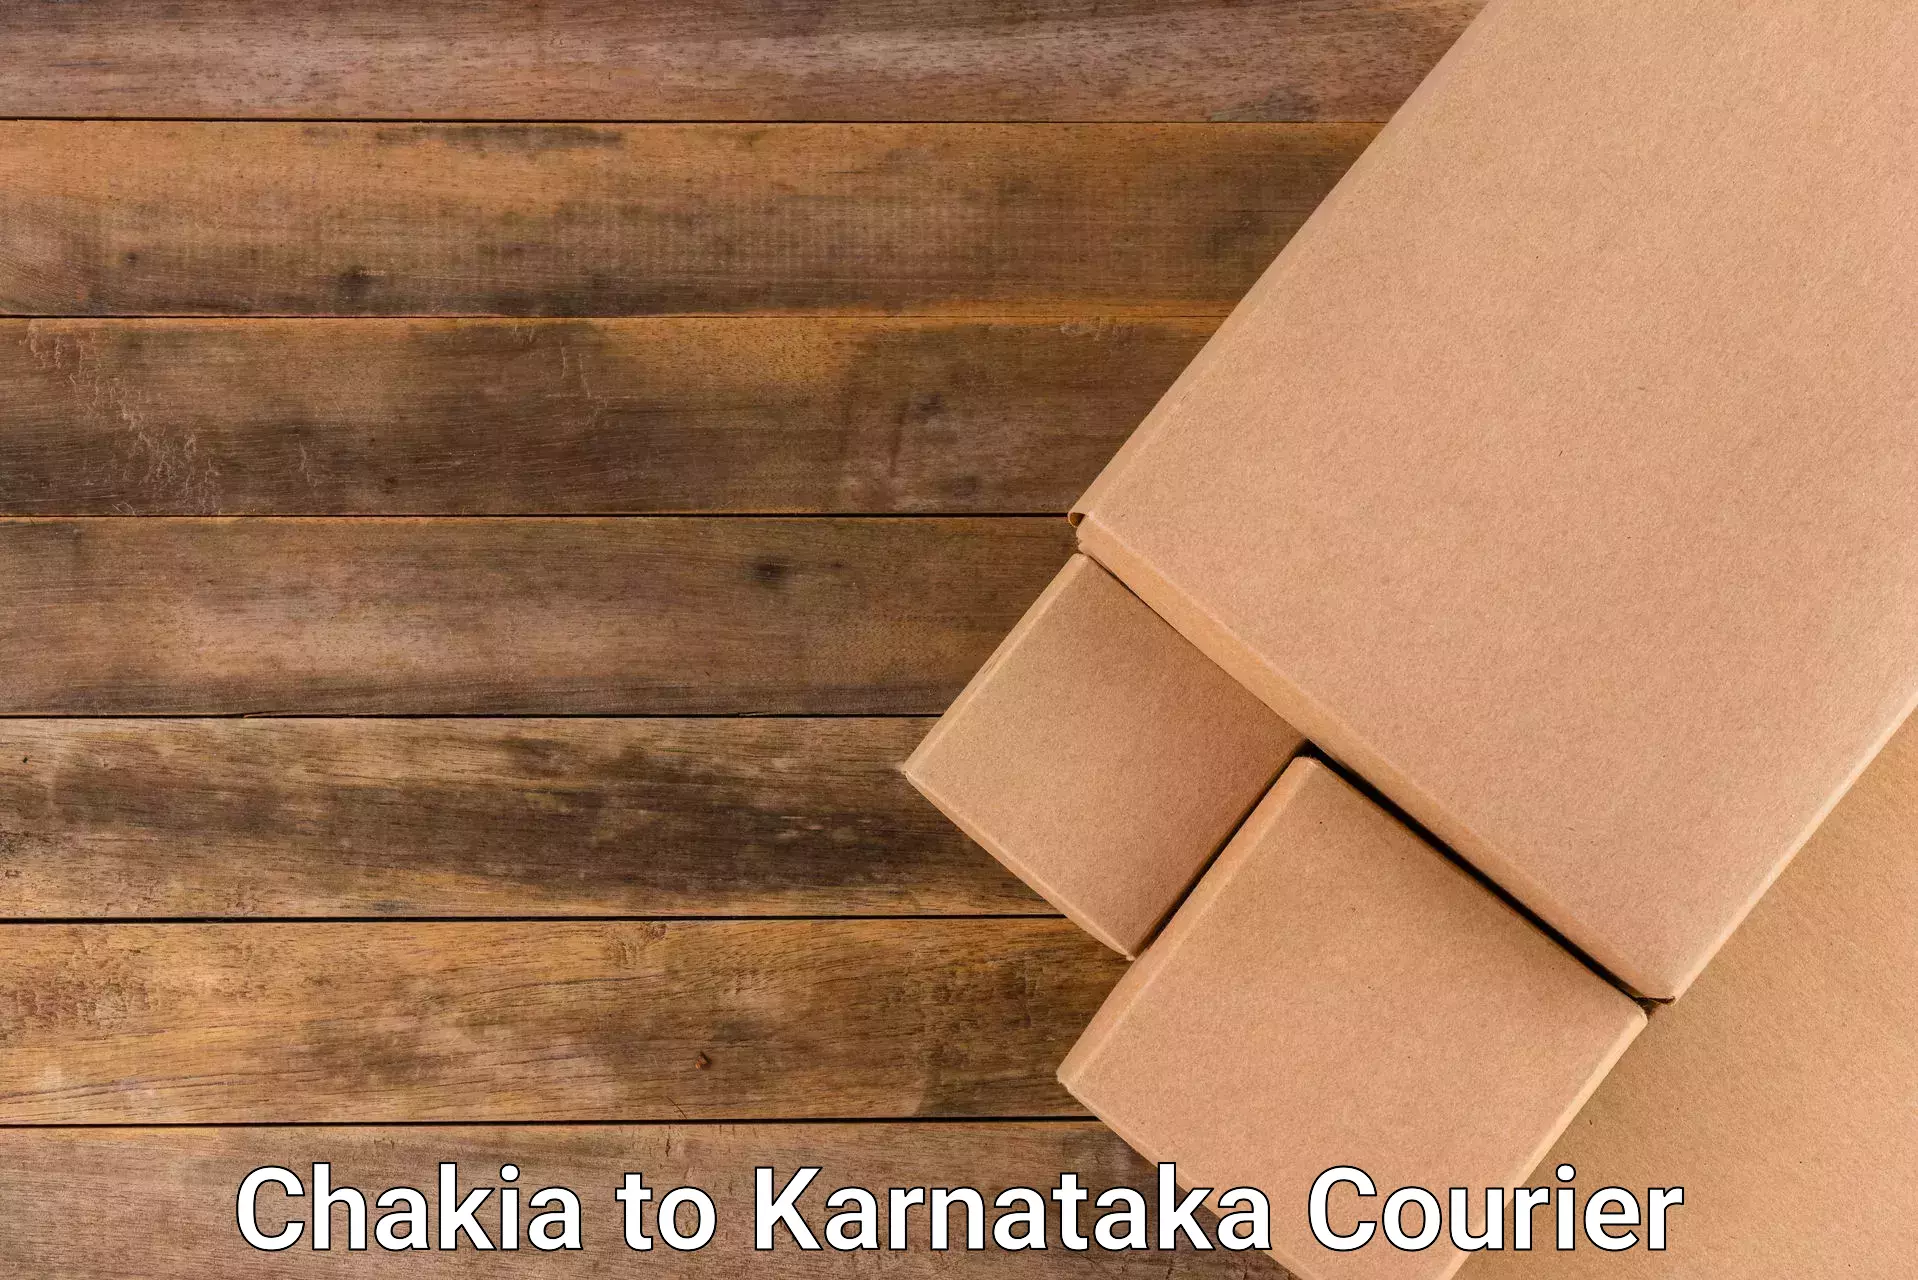 State-of-the-art courier technology Chakia to Karnataka